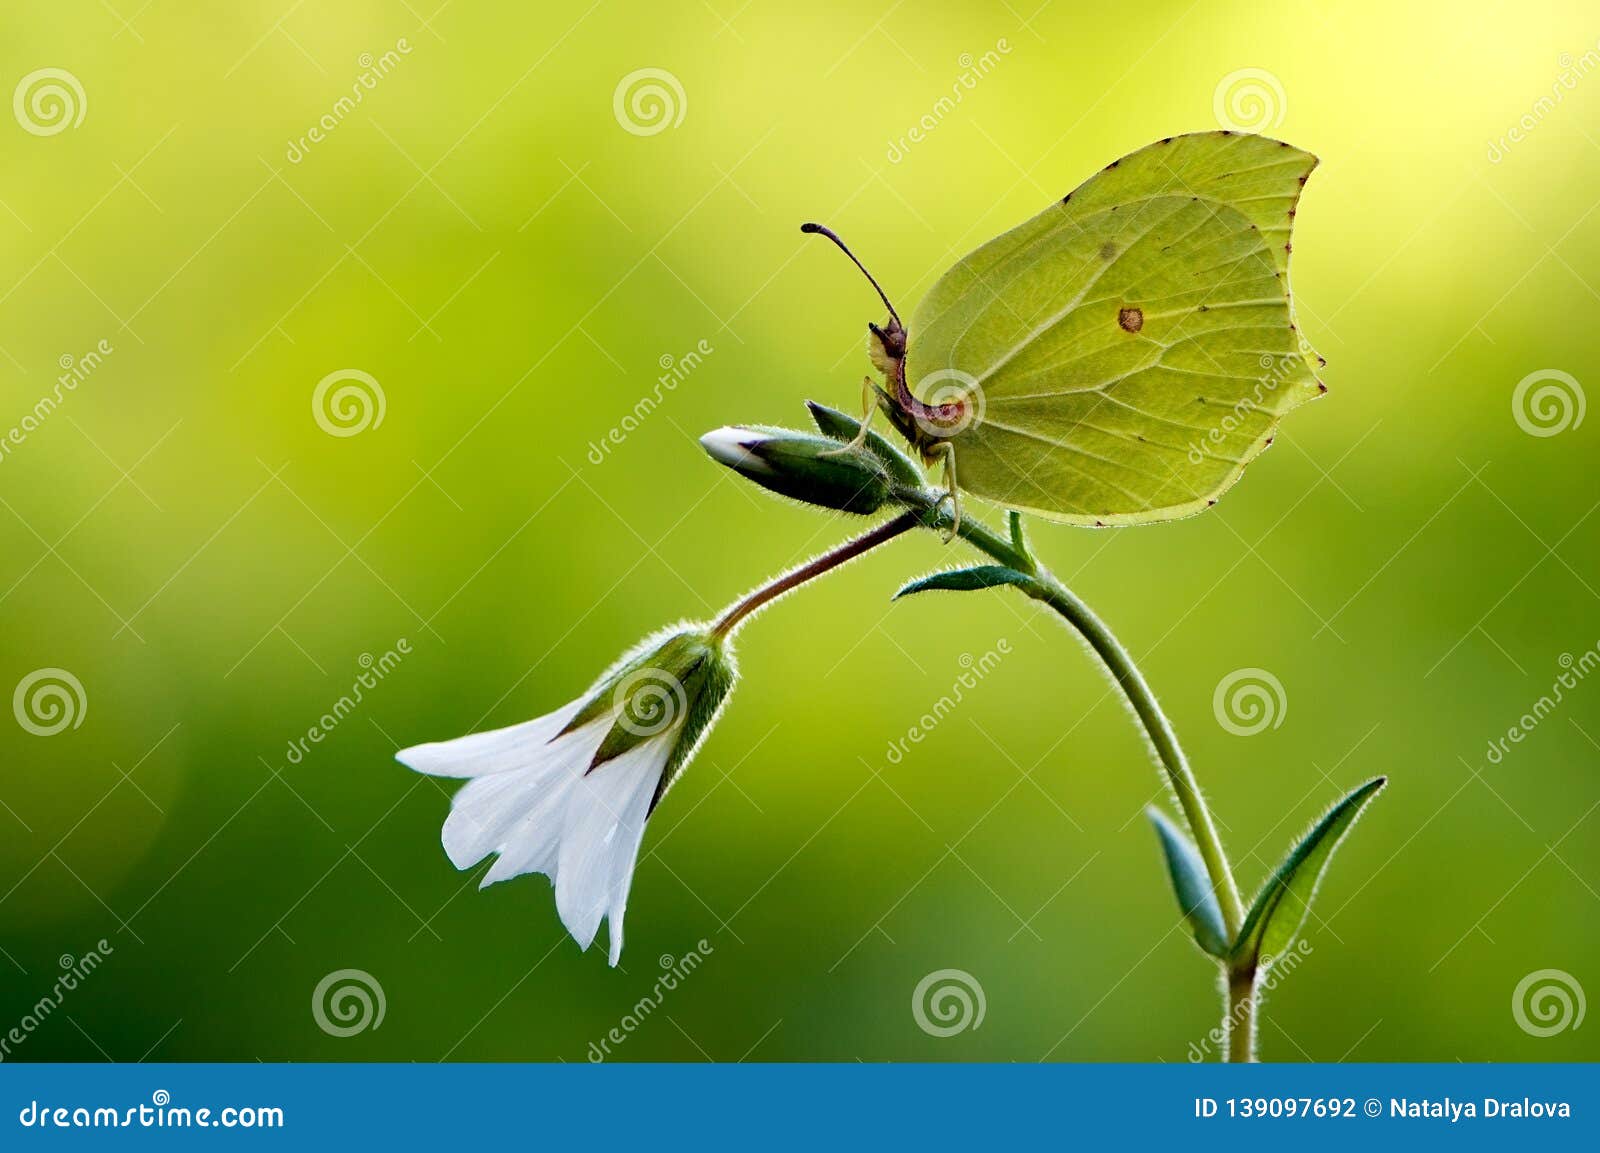 gonepteryx rhamni is a diurnal butterfly